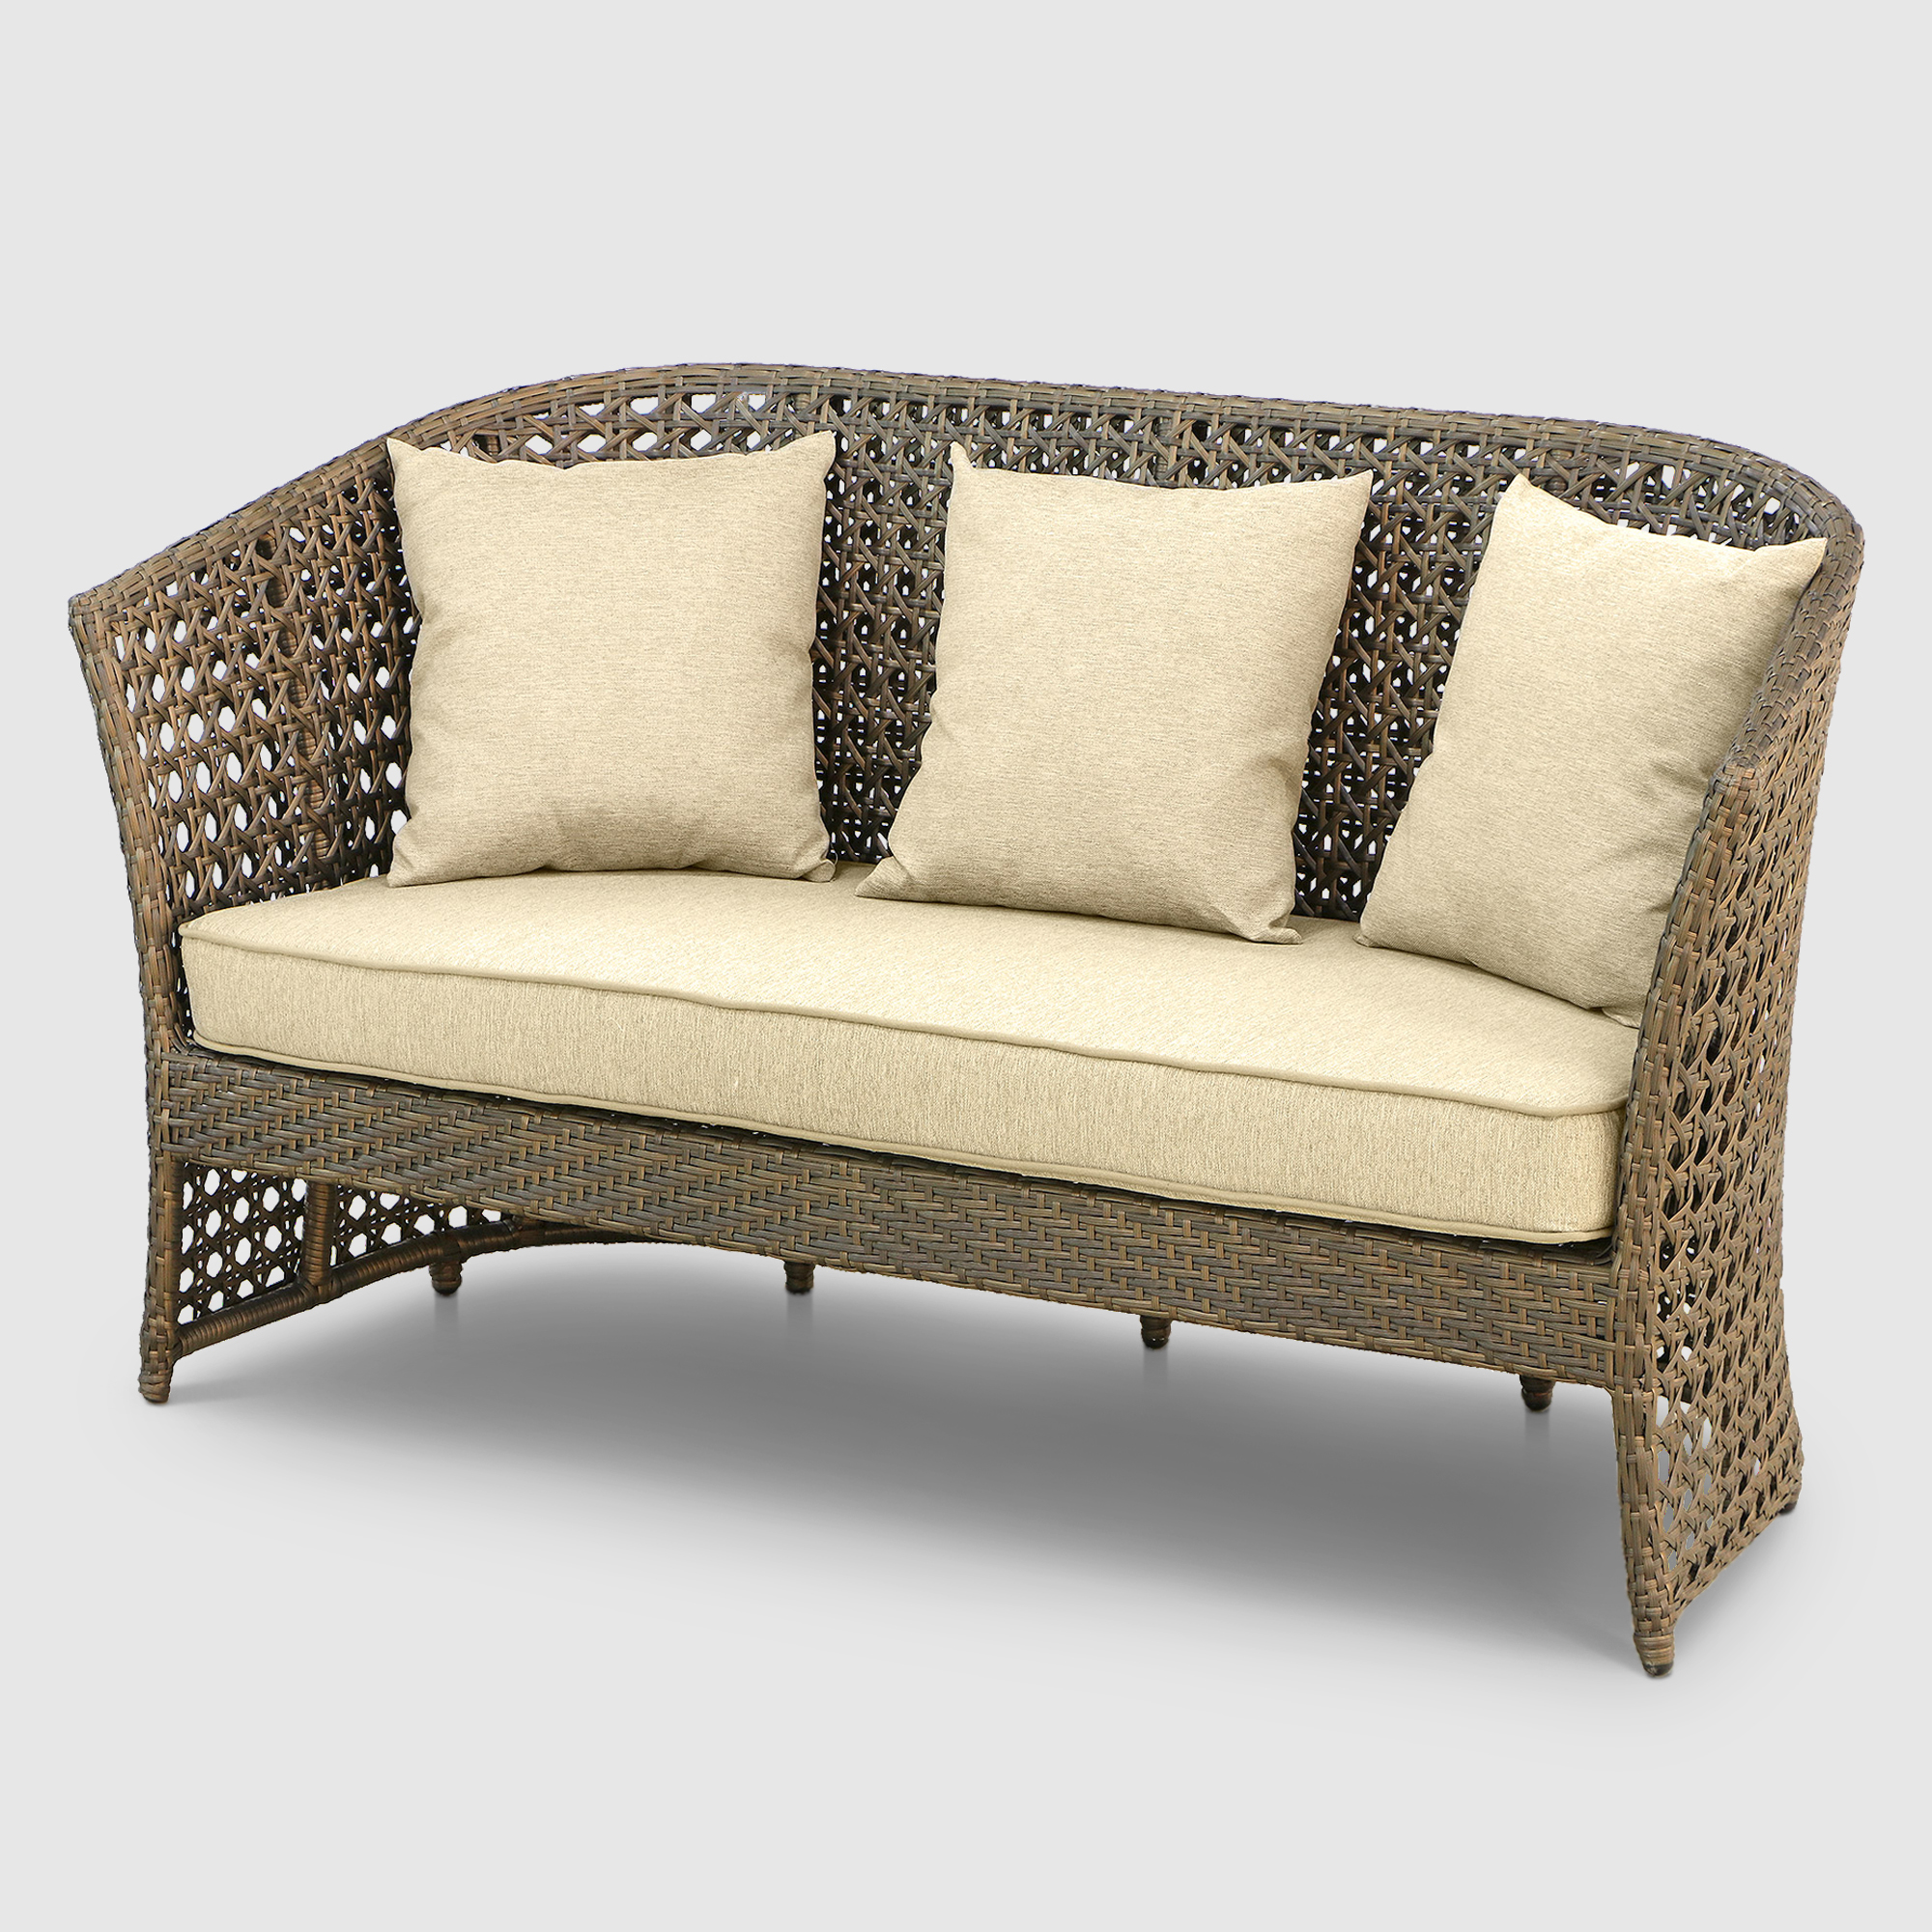 Комплект мебели Mavi rattan 015dk, цвет коричневый, размер 70х155х90 - фото 5